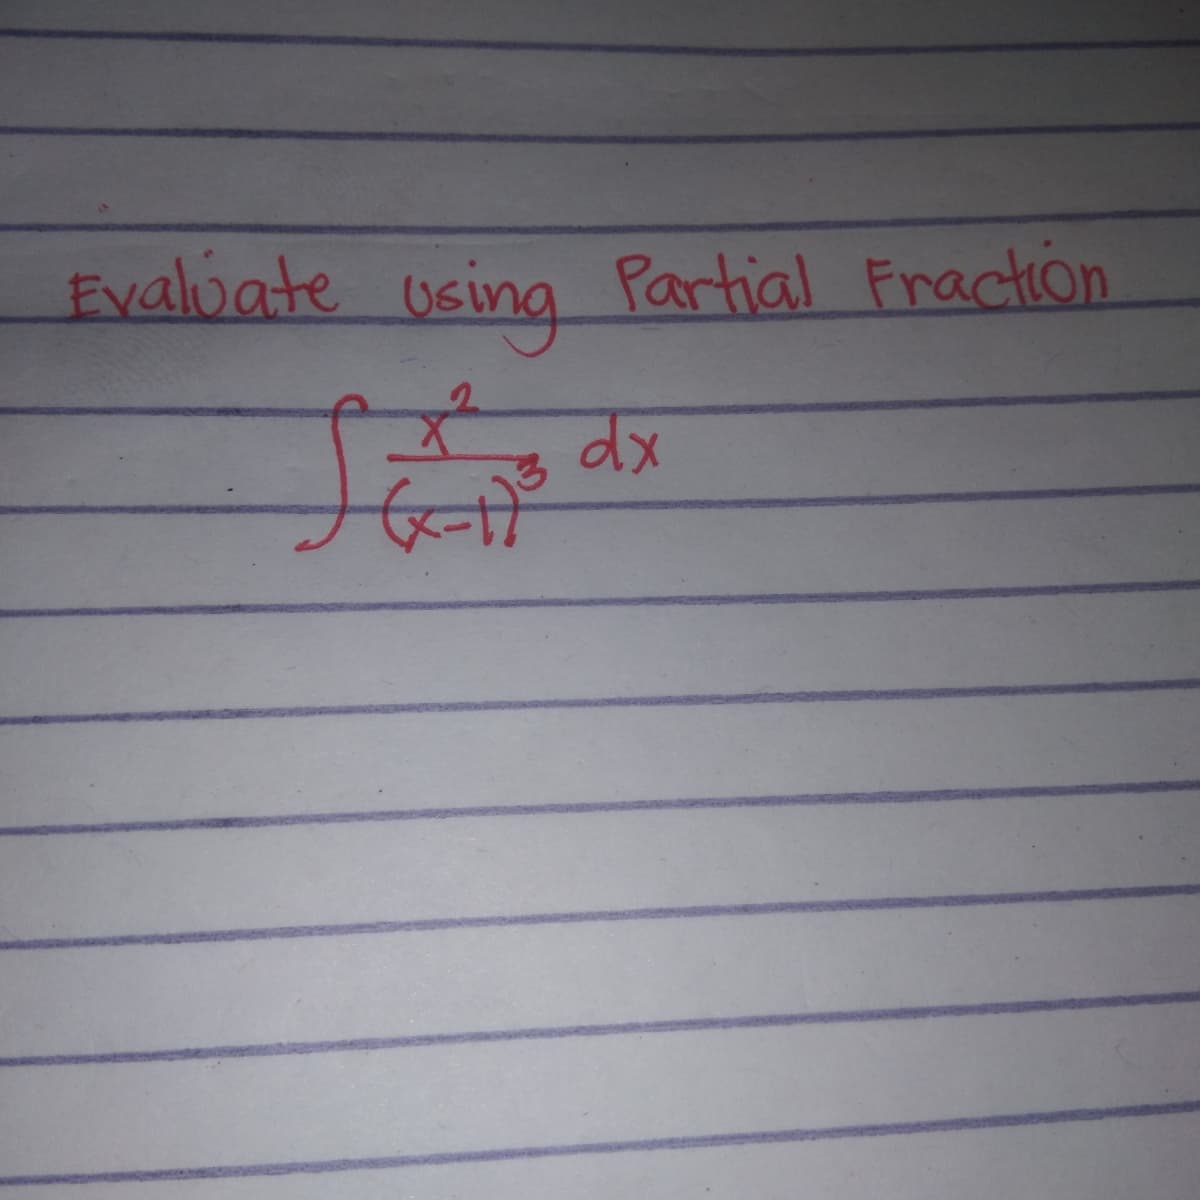 Evalbate using Partial Fraction
लों
